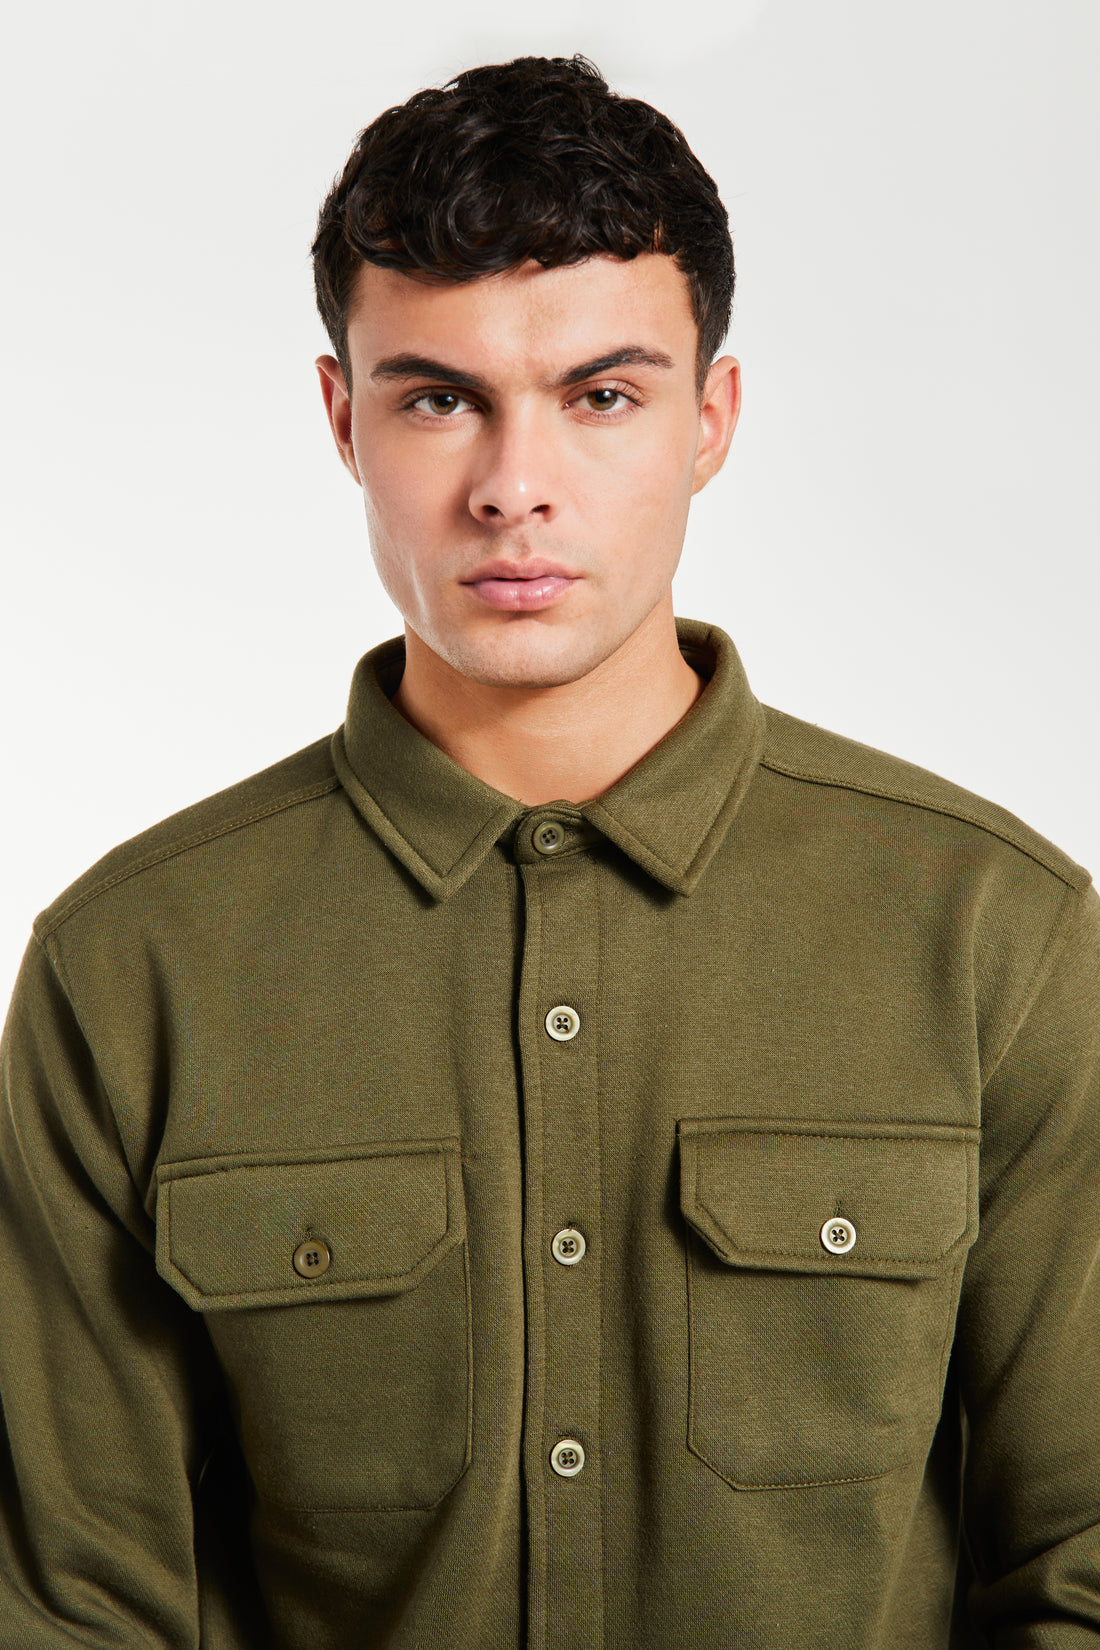 Men's overshirt in military green